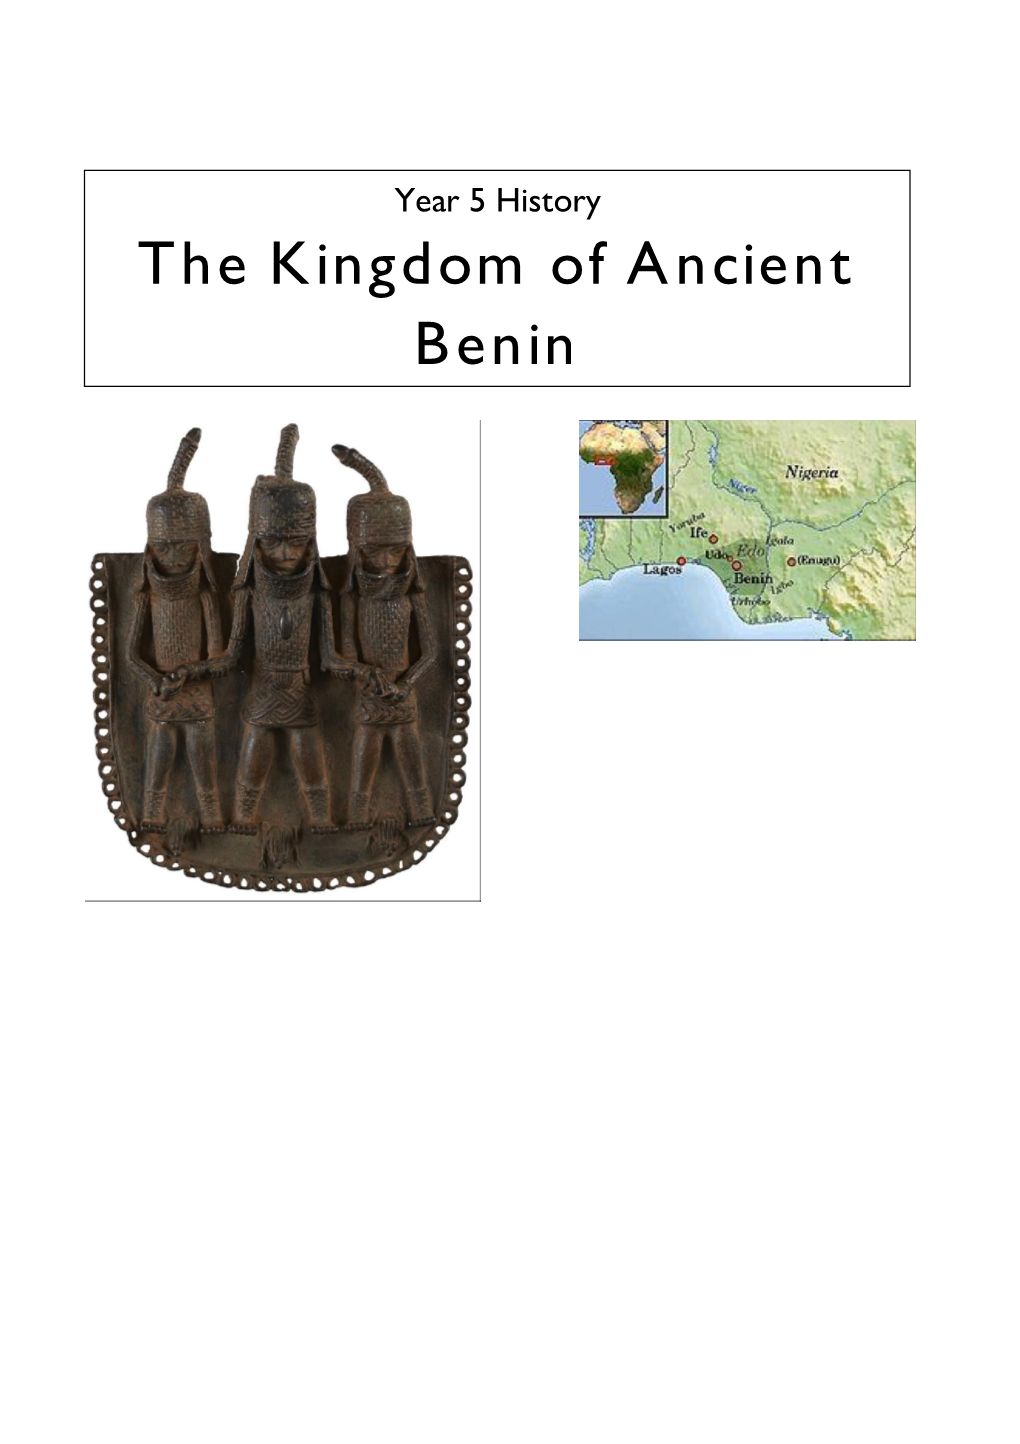 The Kingdom of Ancient Benin Nam E: ______